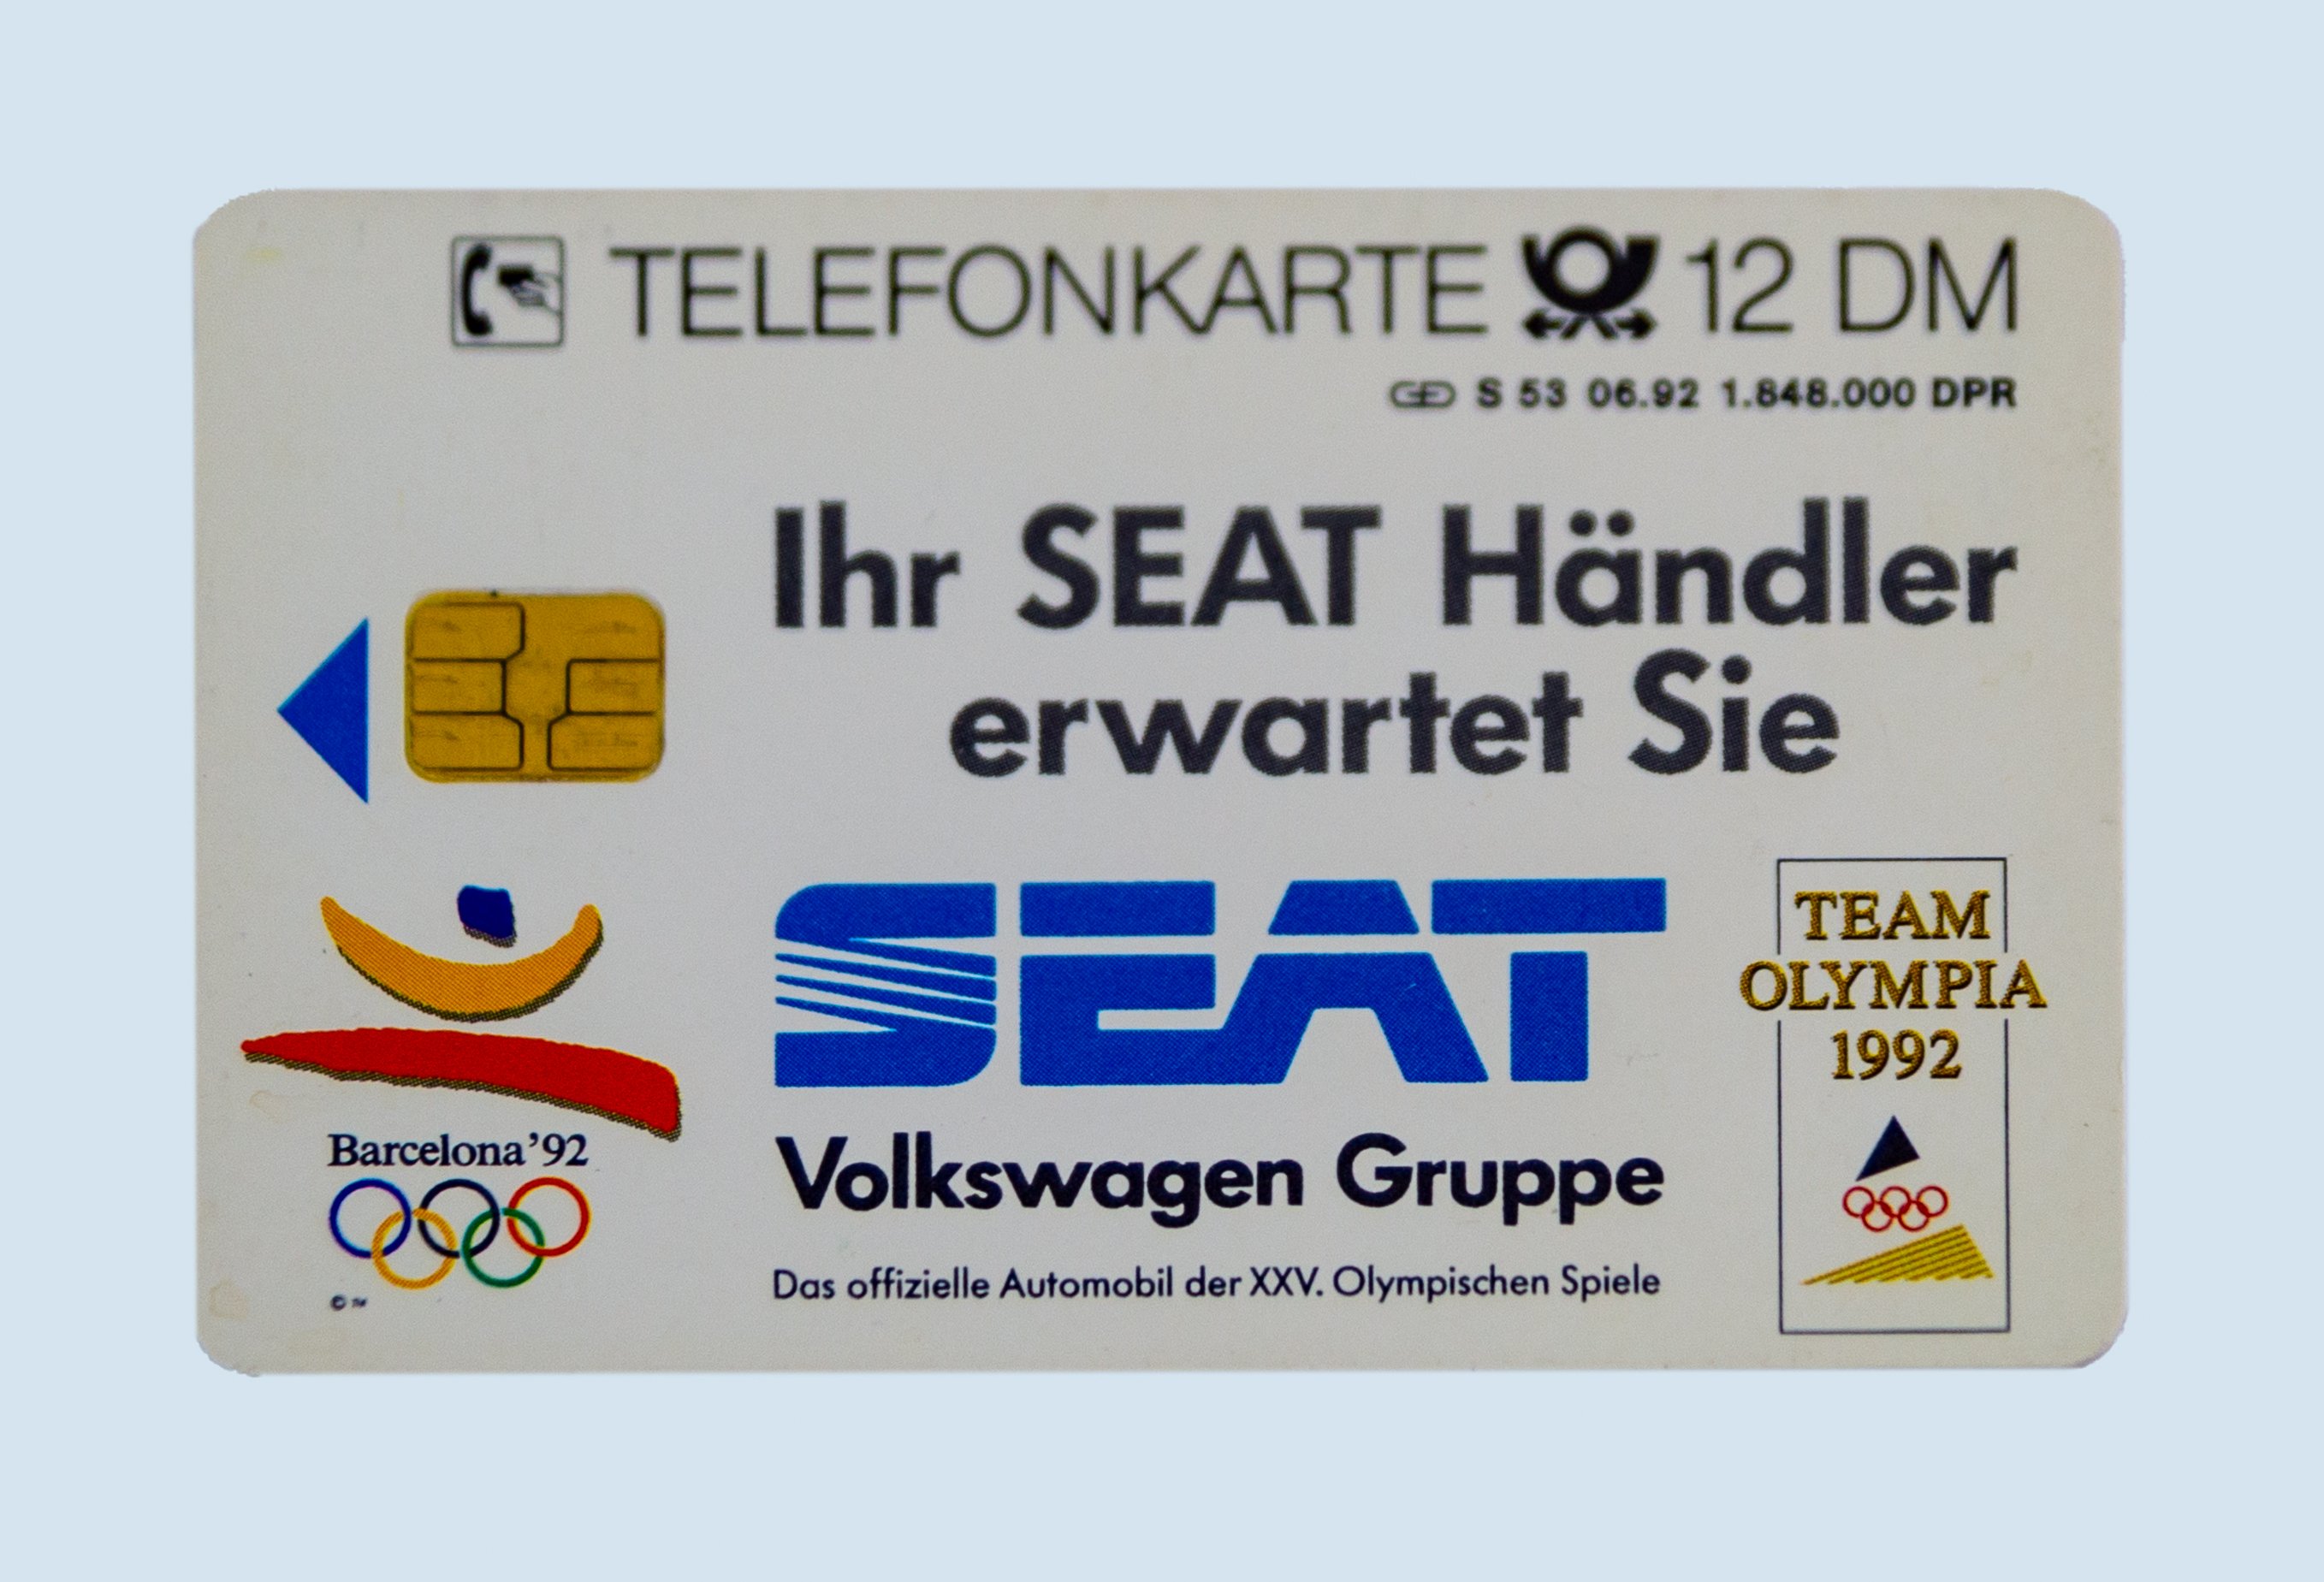 Telefonkarte 12 DM Olympia-Flotte von Seat (Verkehrsmuseum Dresden CC BY-NC-SA)